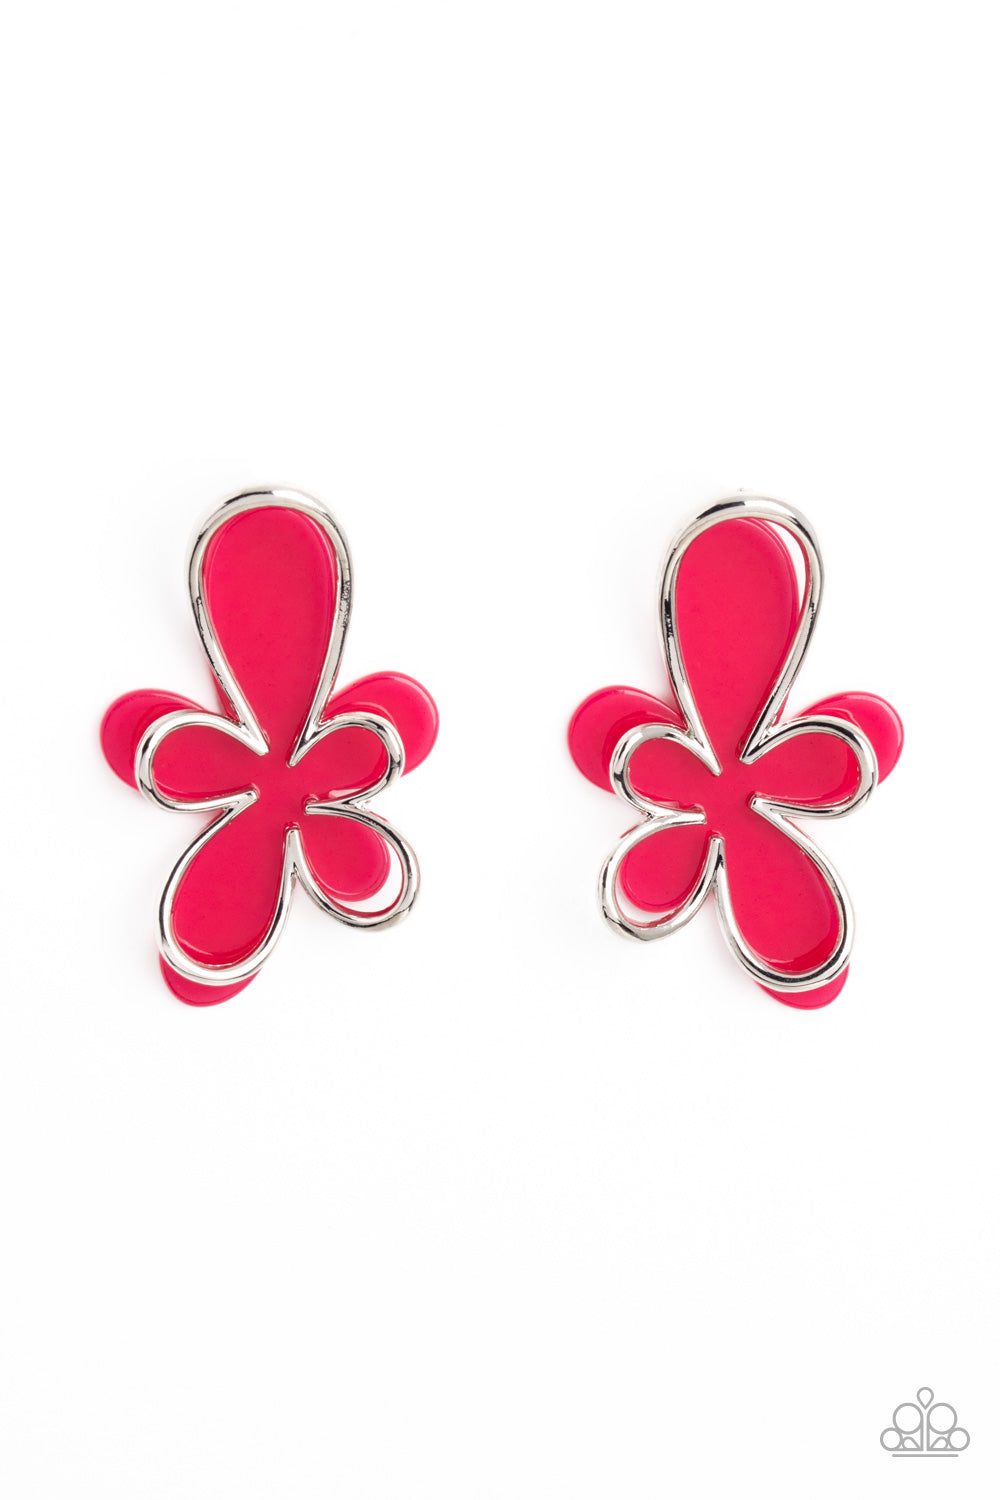 oak-sisters-jewelry-glimmering-gardens-pink-post earrings-paparazzi-accessories-by-lisa